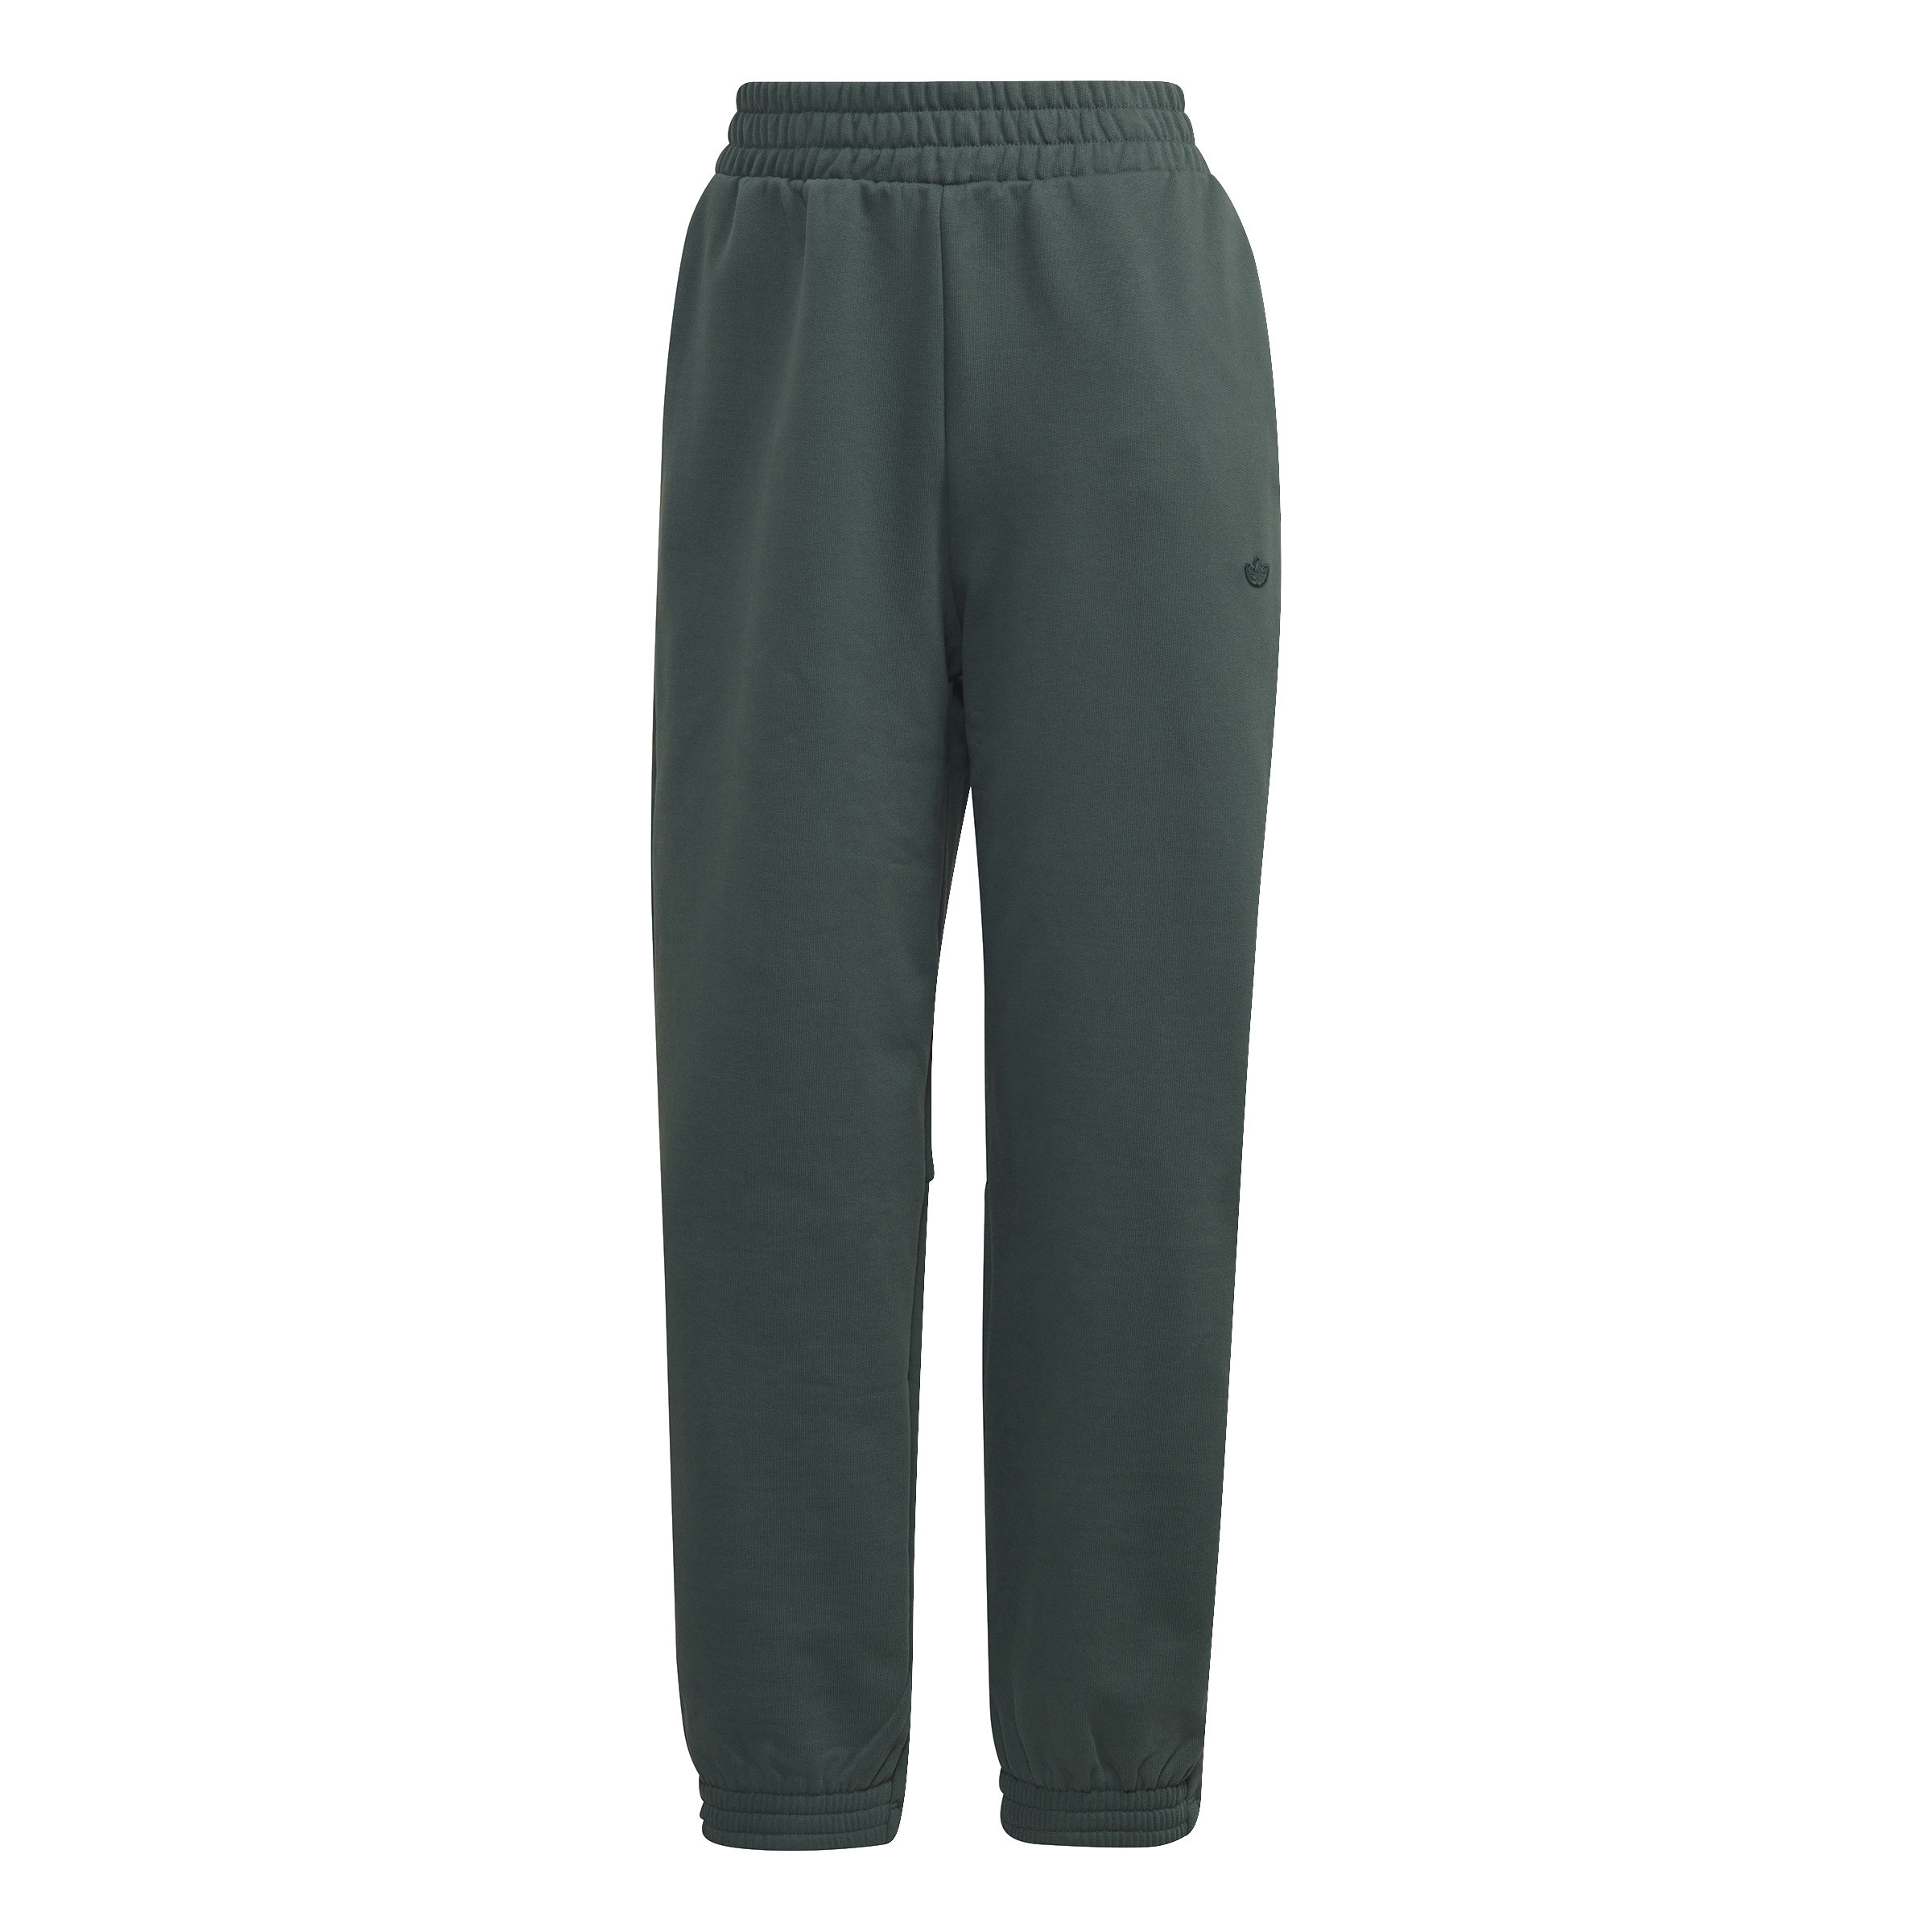 Adidas - Pantaloni jogger adicolor, Verde scuro, large image number 1